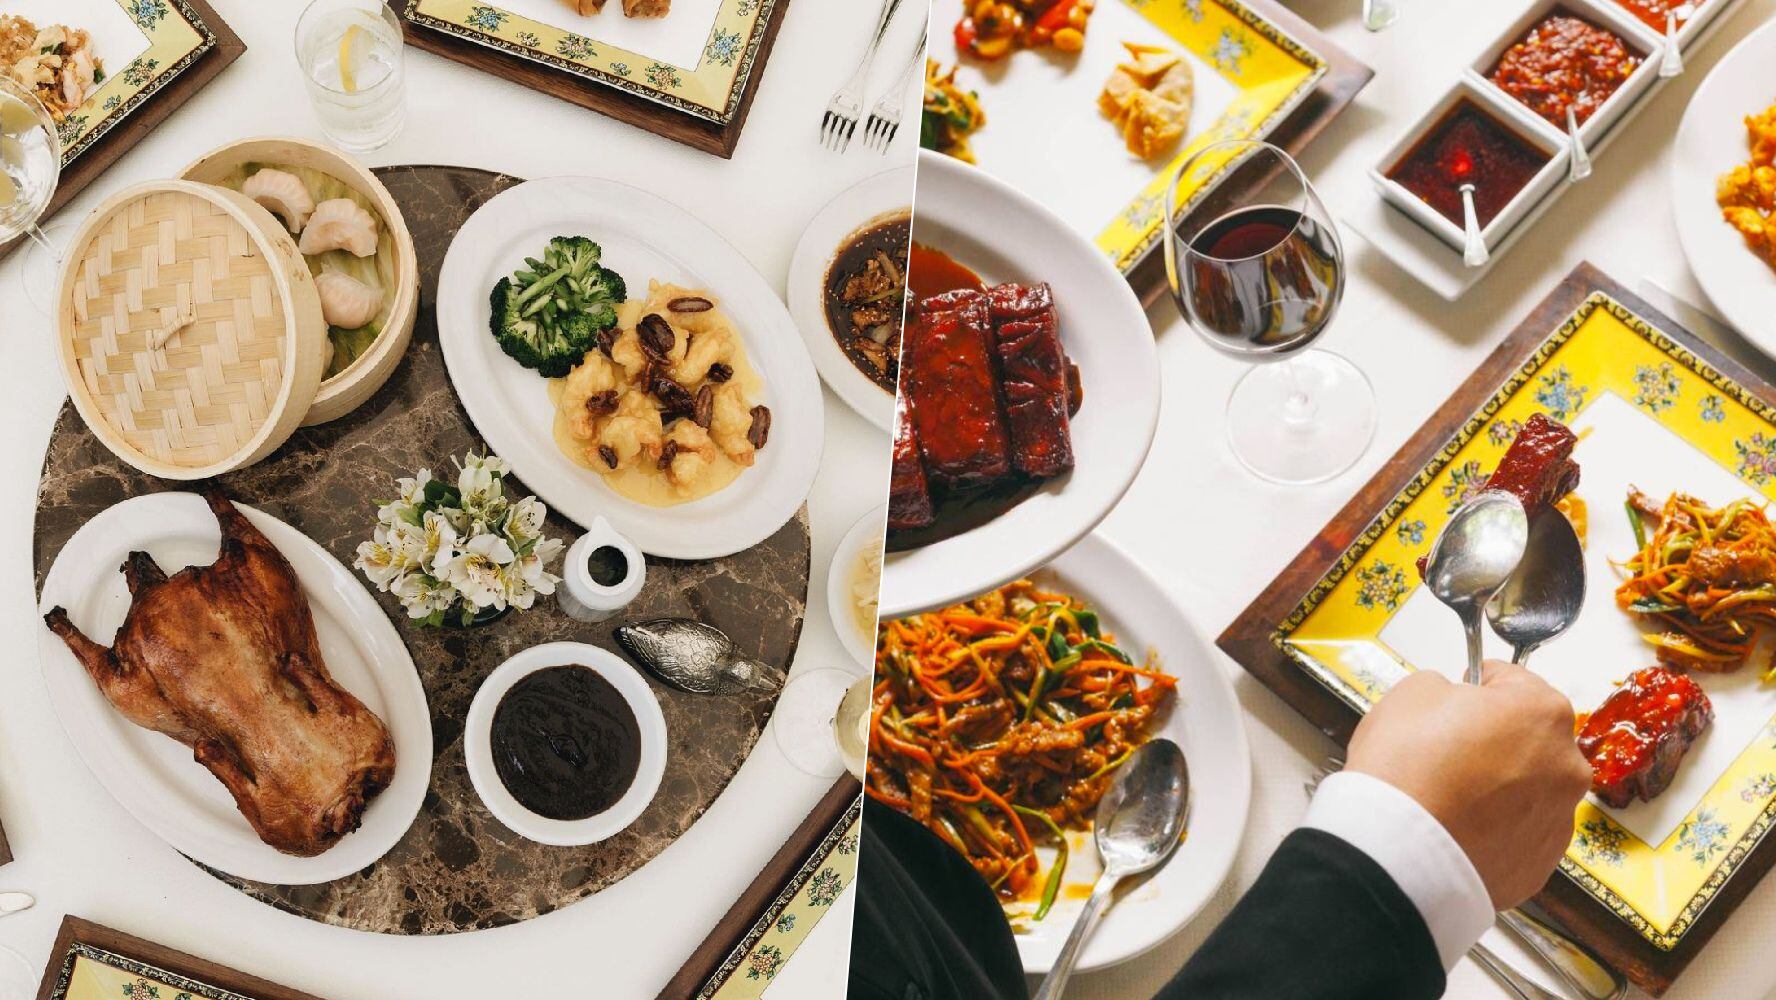 El restaurante Hunan se especializa en comida china. (Foto: Instagram / @hunan_mx / Facebook / @grupohunanmx)